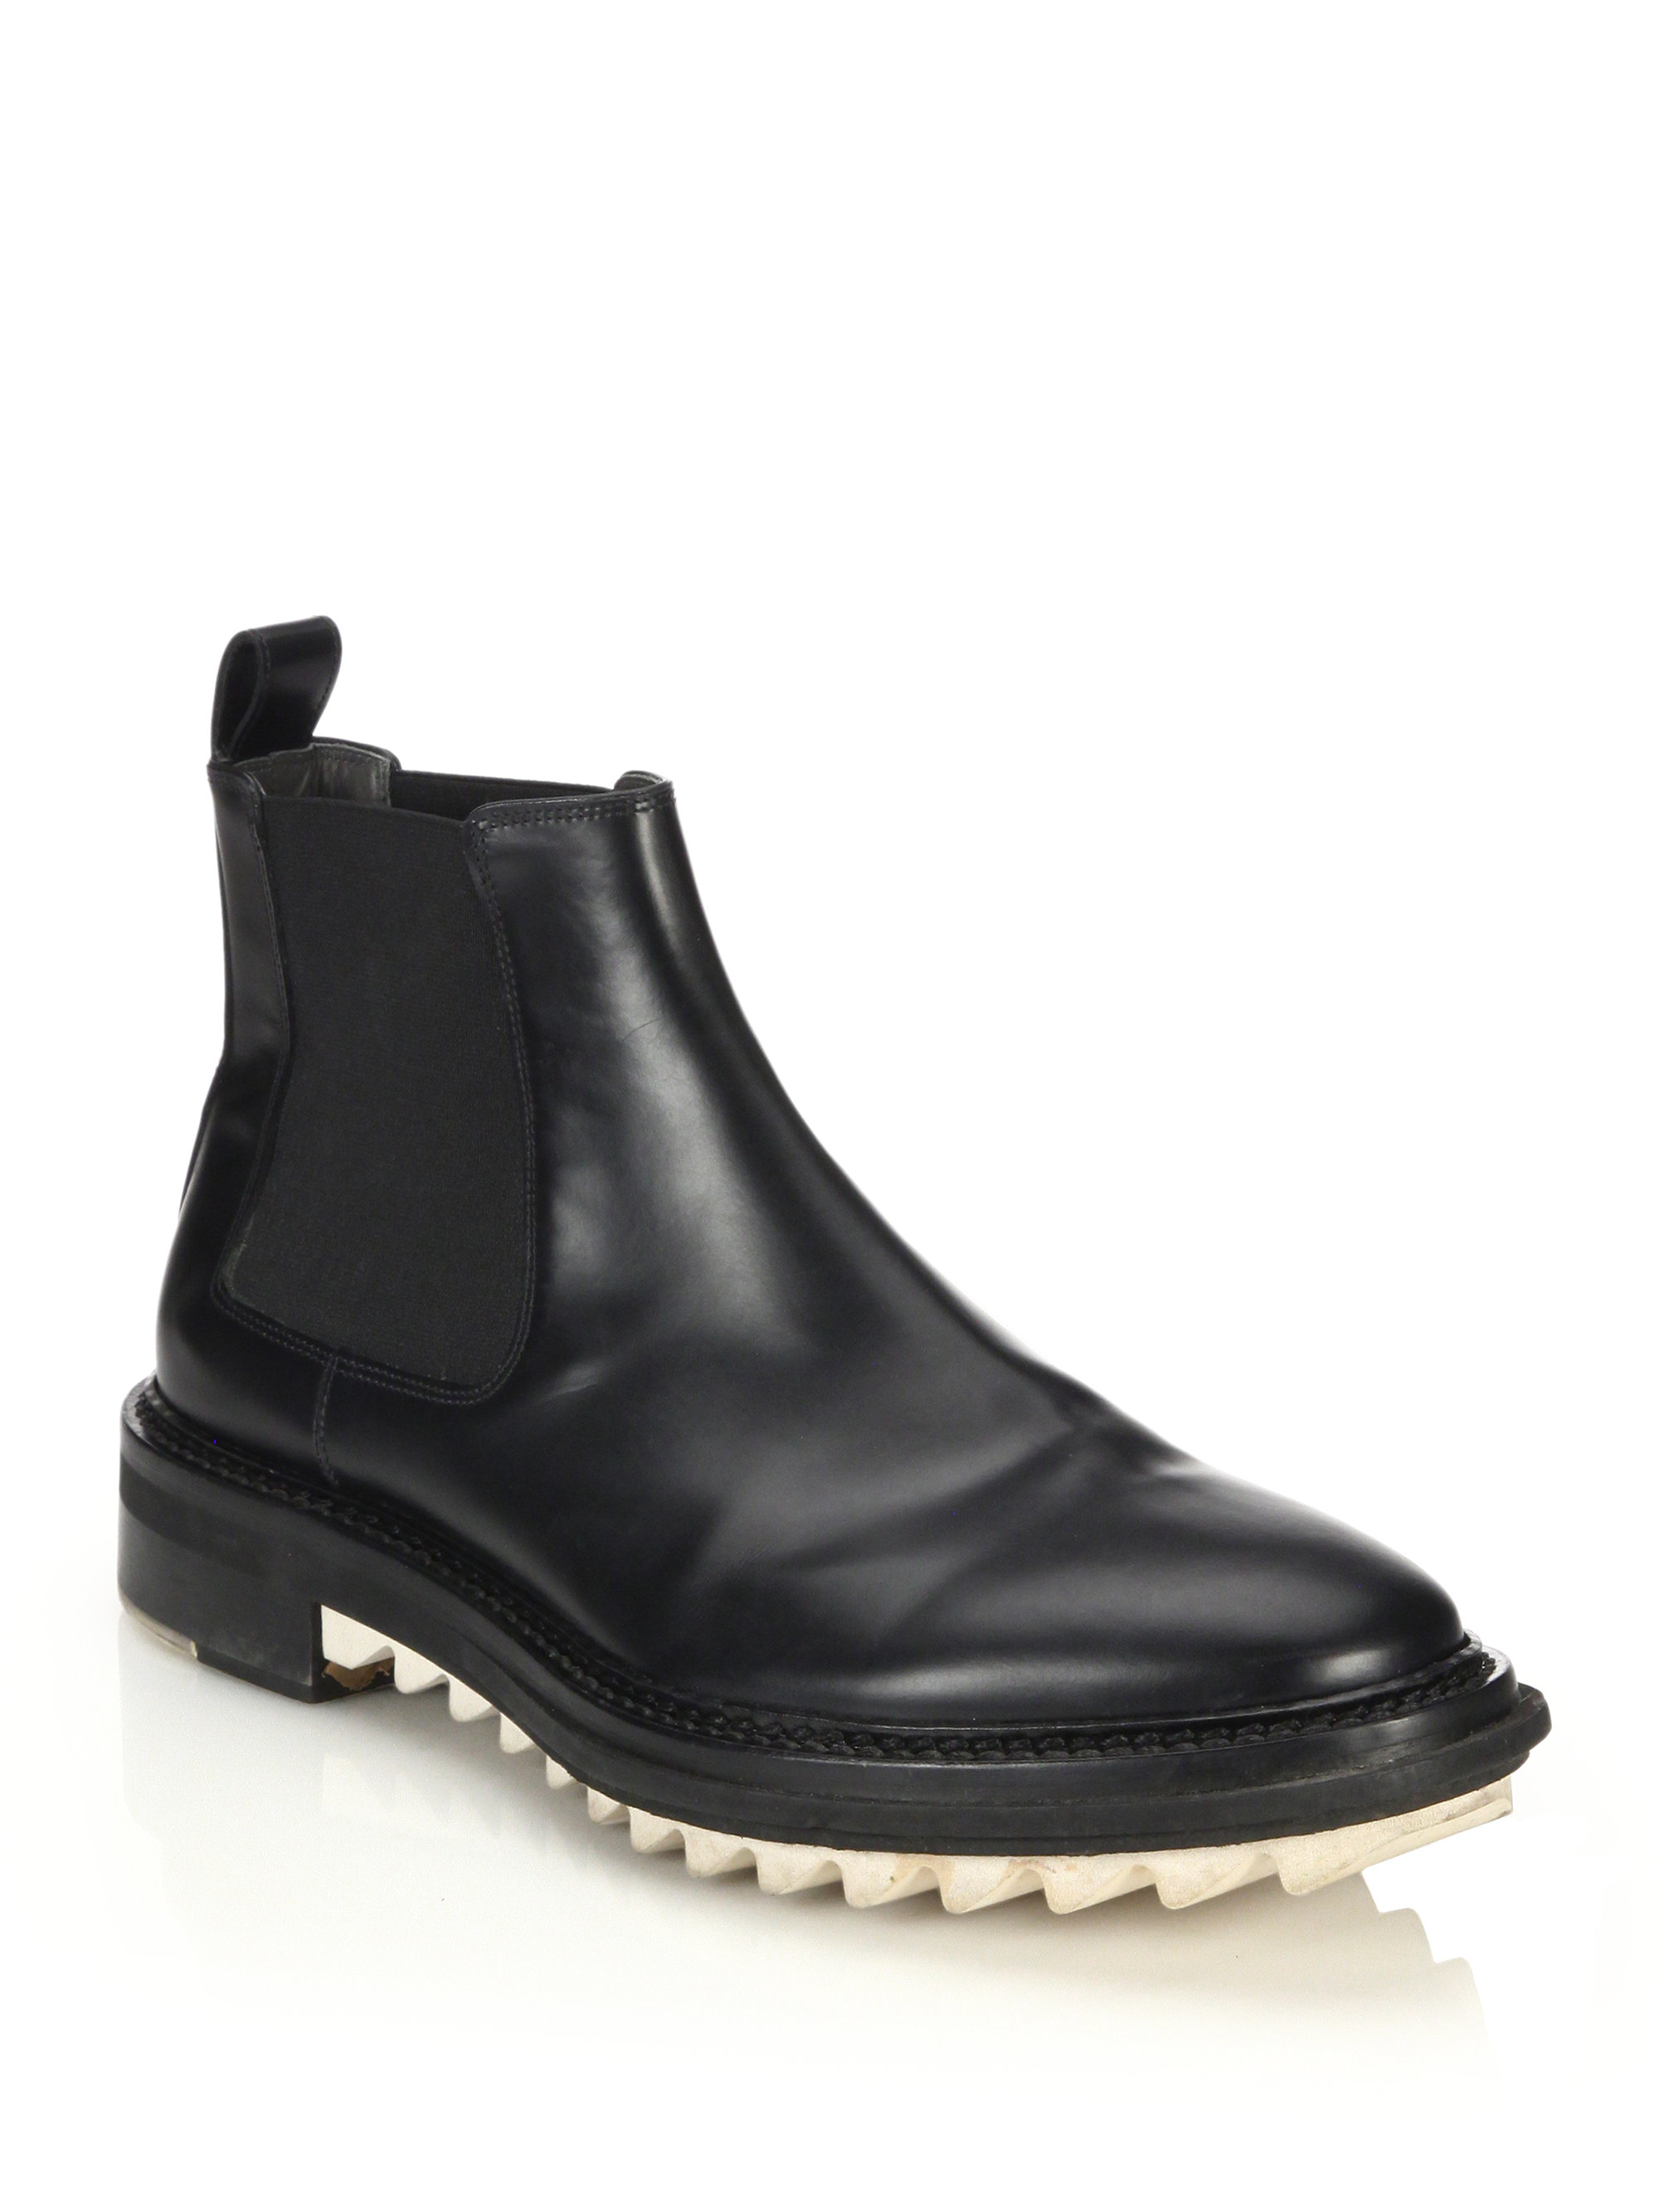 Lyst - Lanvin Abrazivato Leather Chelsea Boots in Black for Men